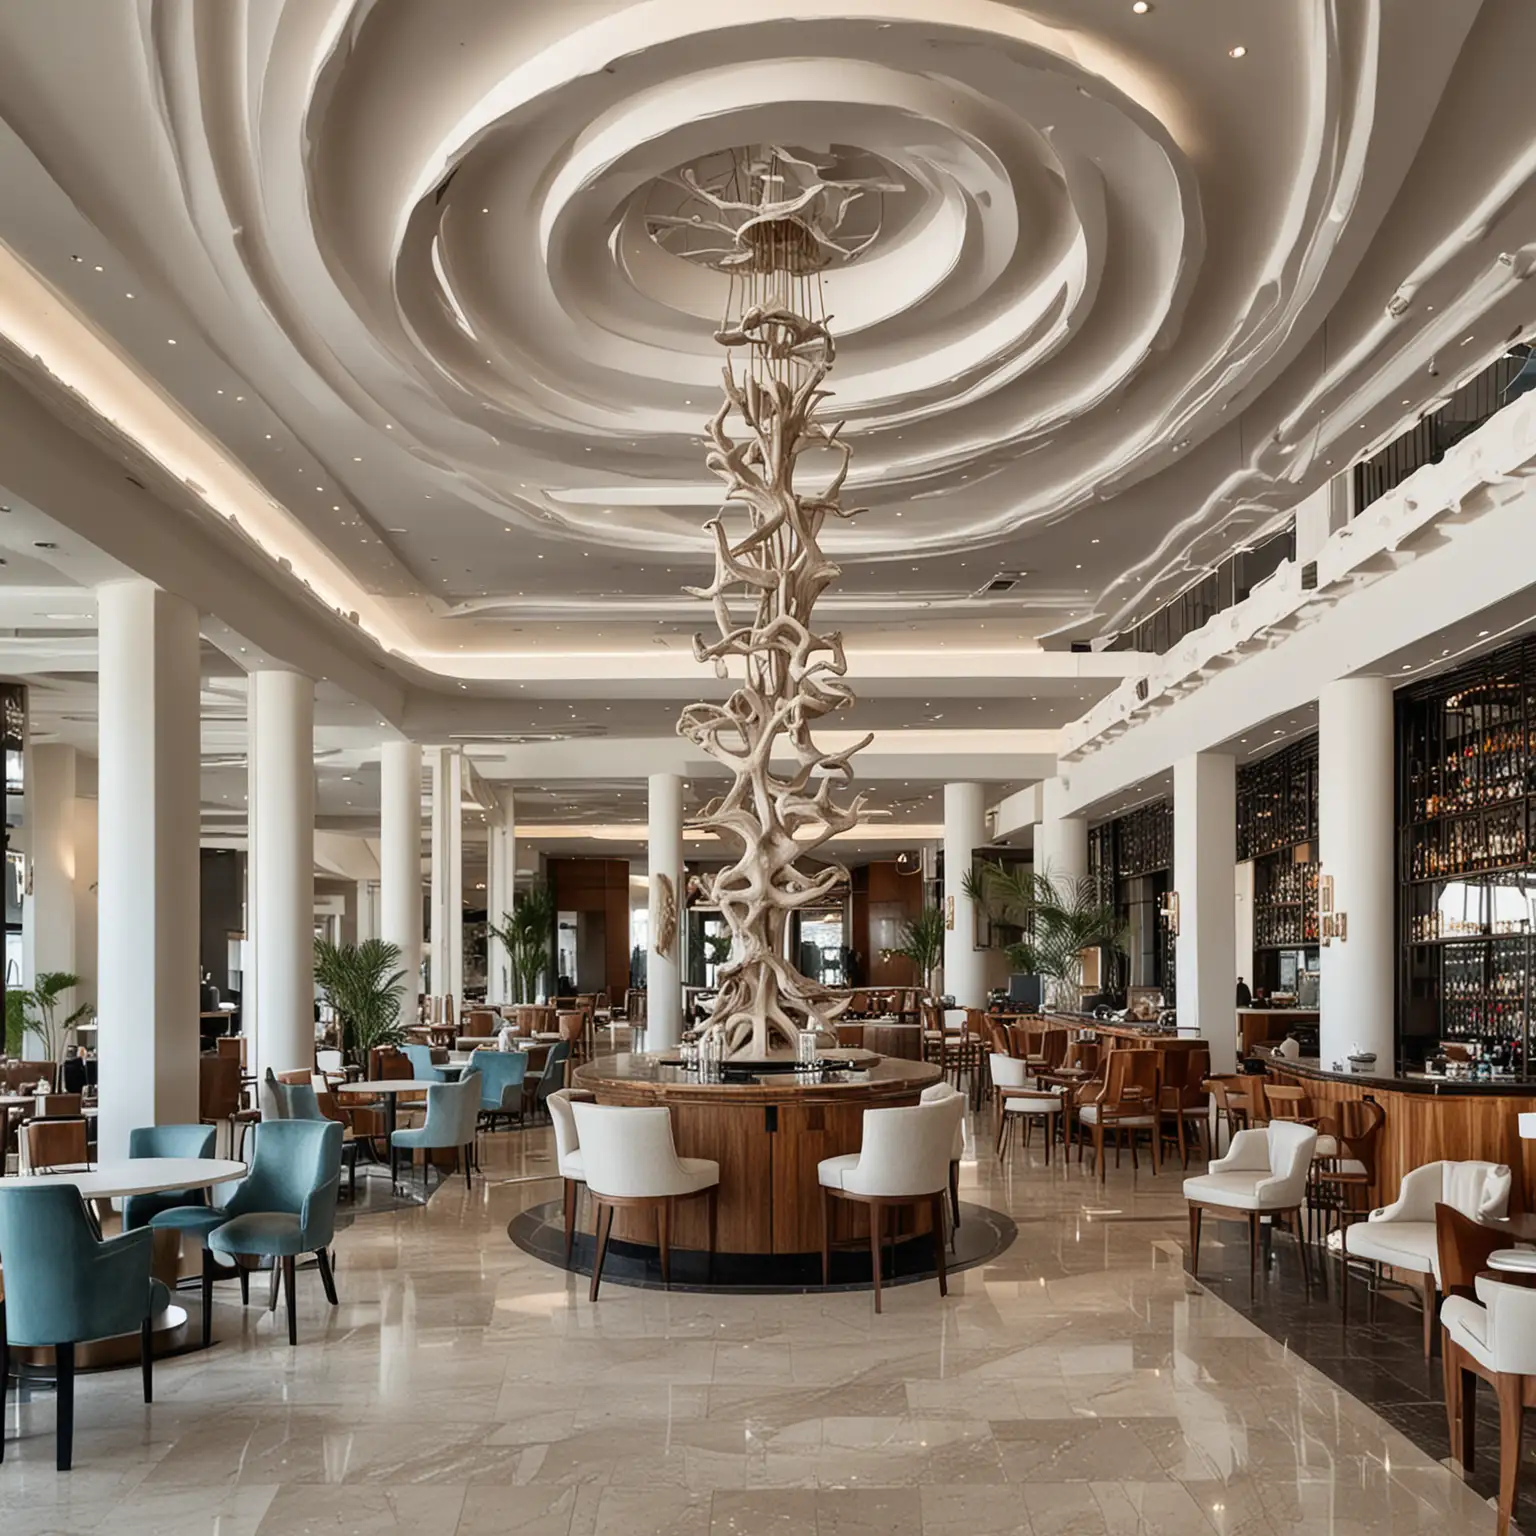 Modern Coastal Grand Hotel Lobby with Sculpture above Round Restaurant Bar